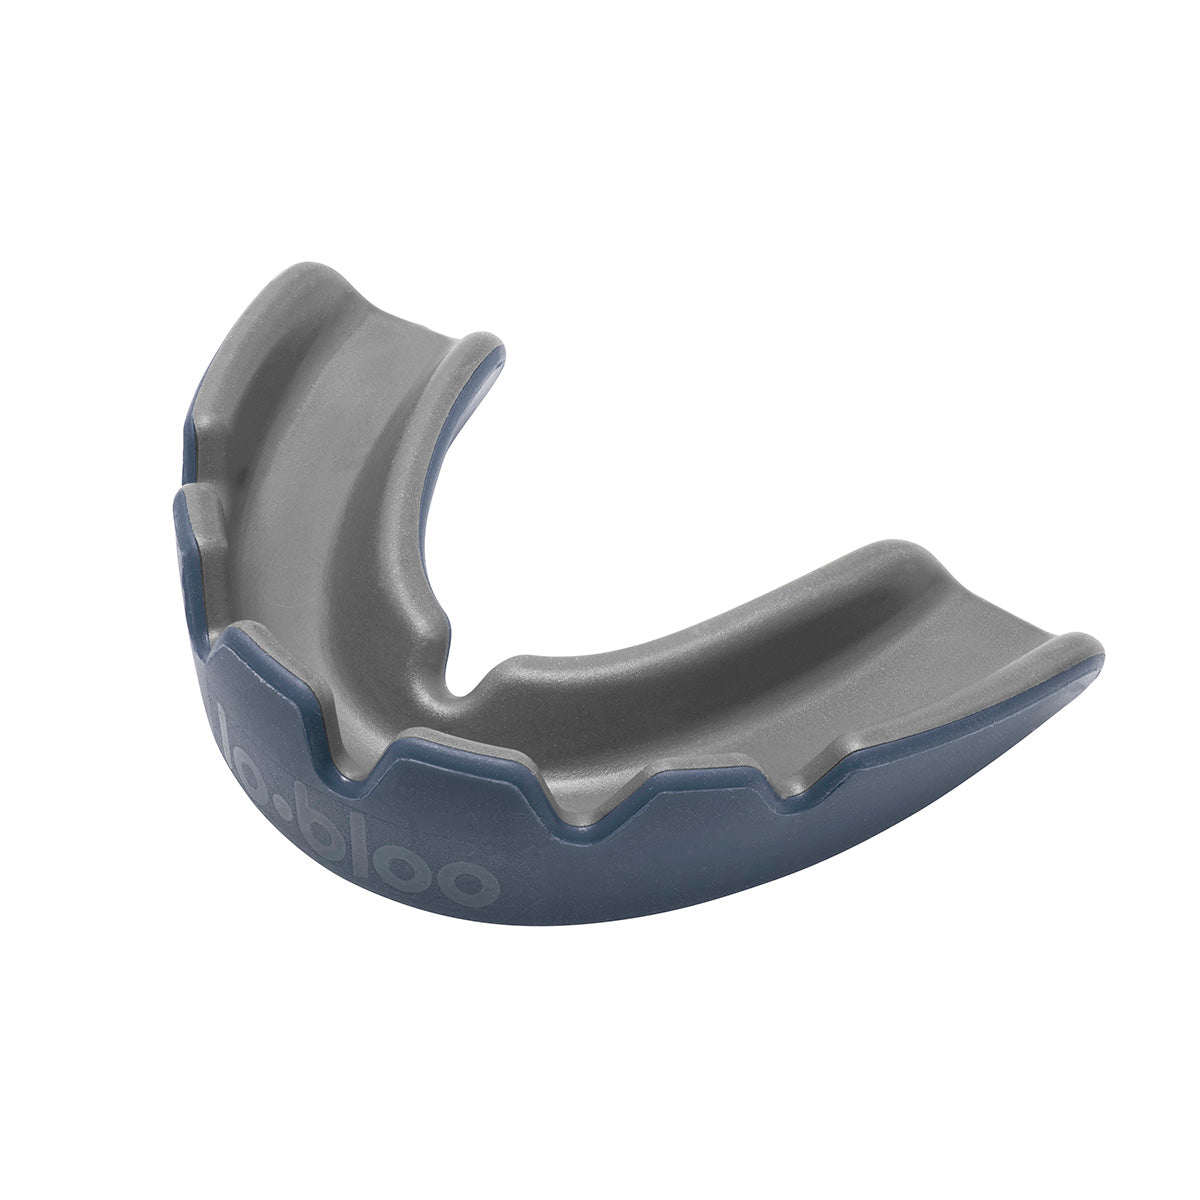 lobloo® SLICK professional dual-density mouthguard